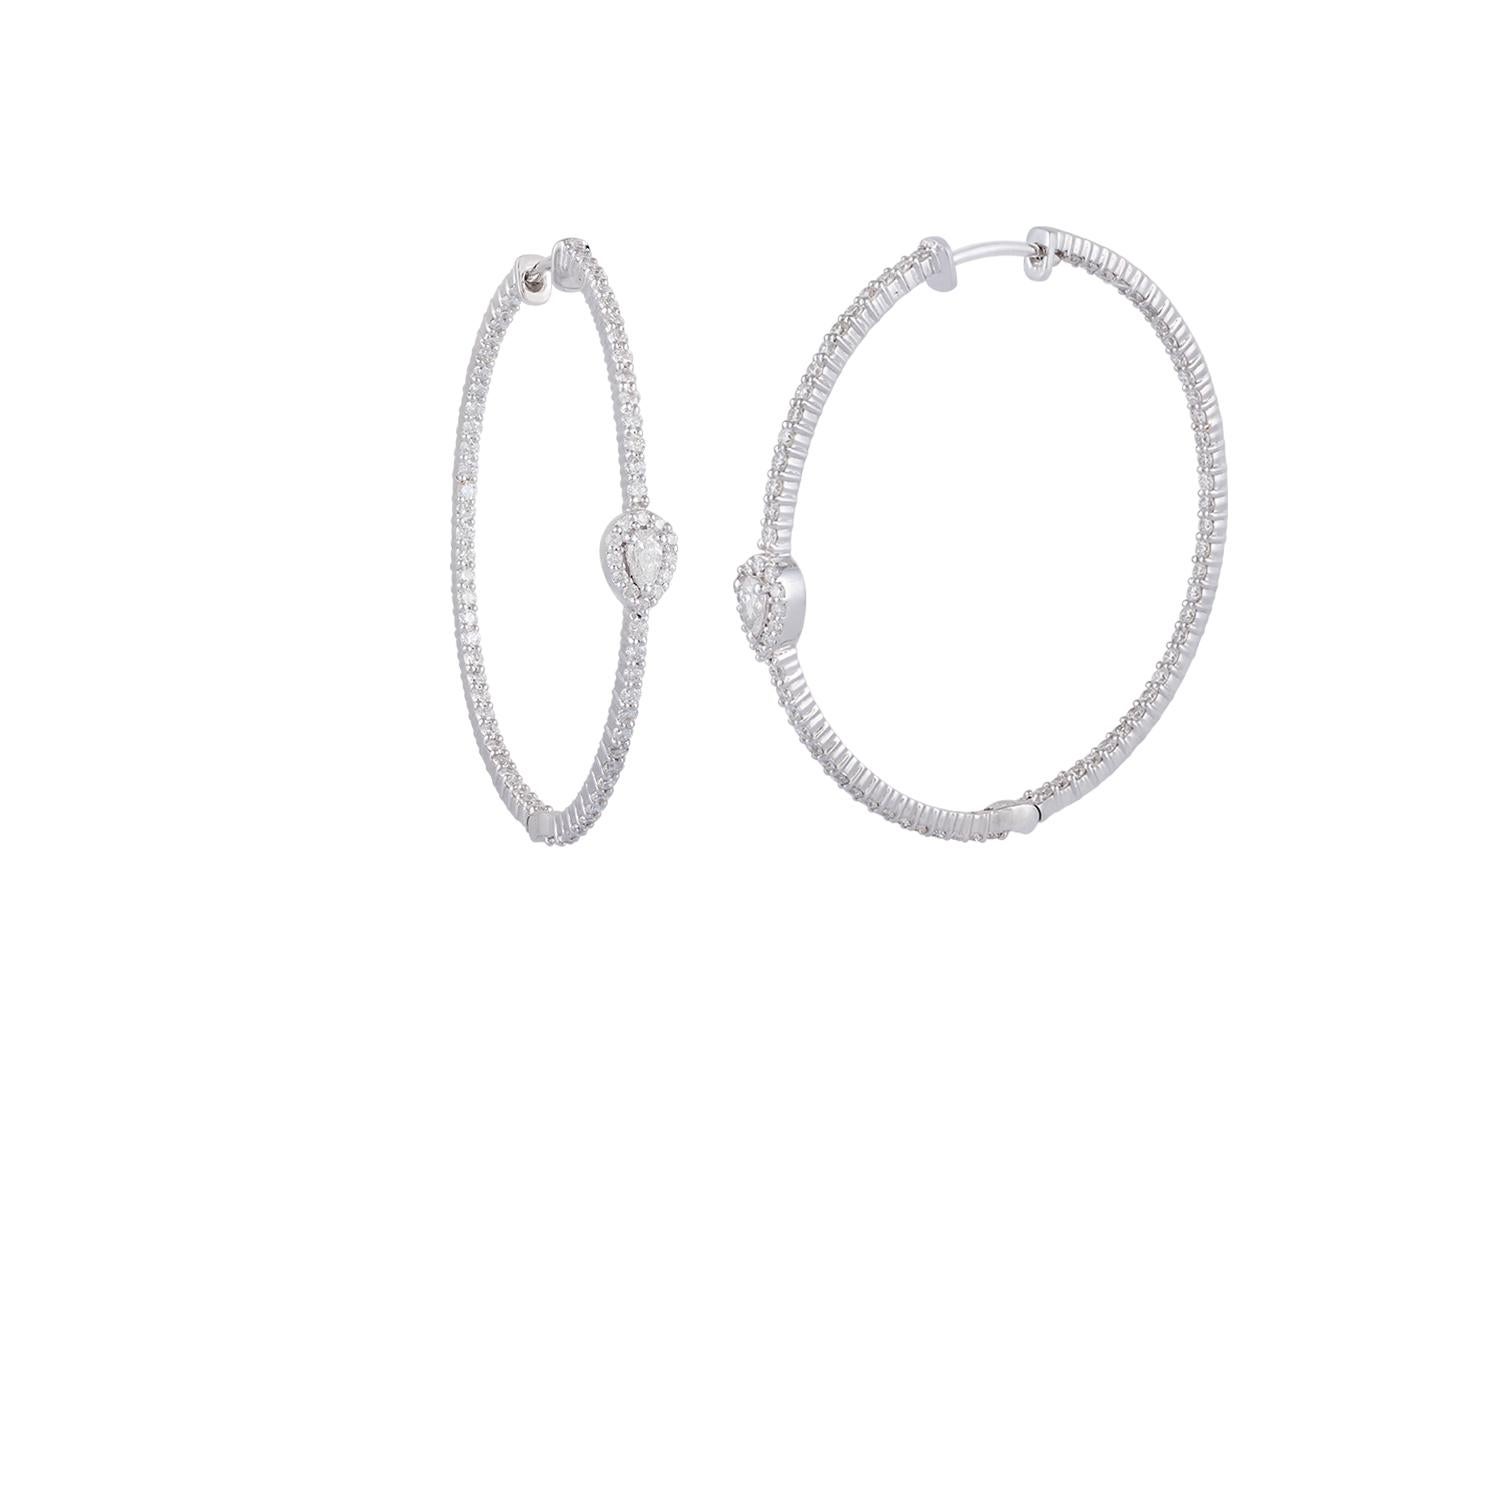 Contemporary Diamond Hoop Earring Studded in 18 Karat White Gold